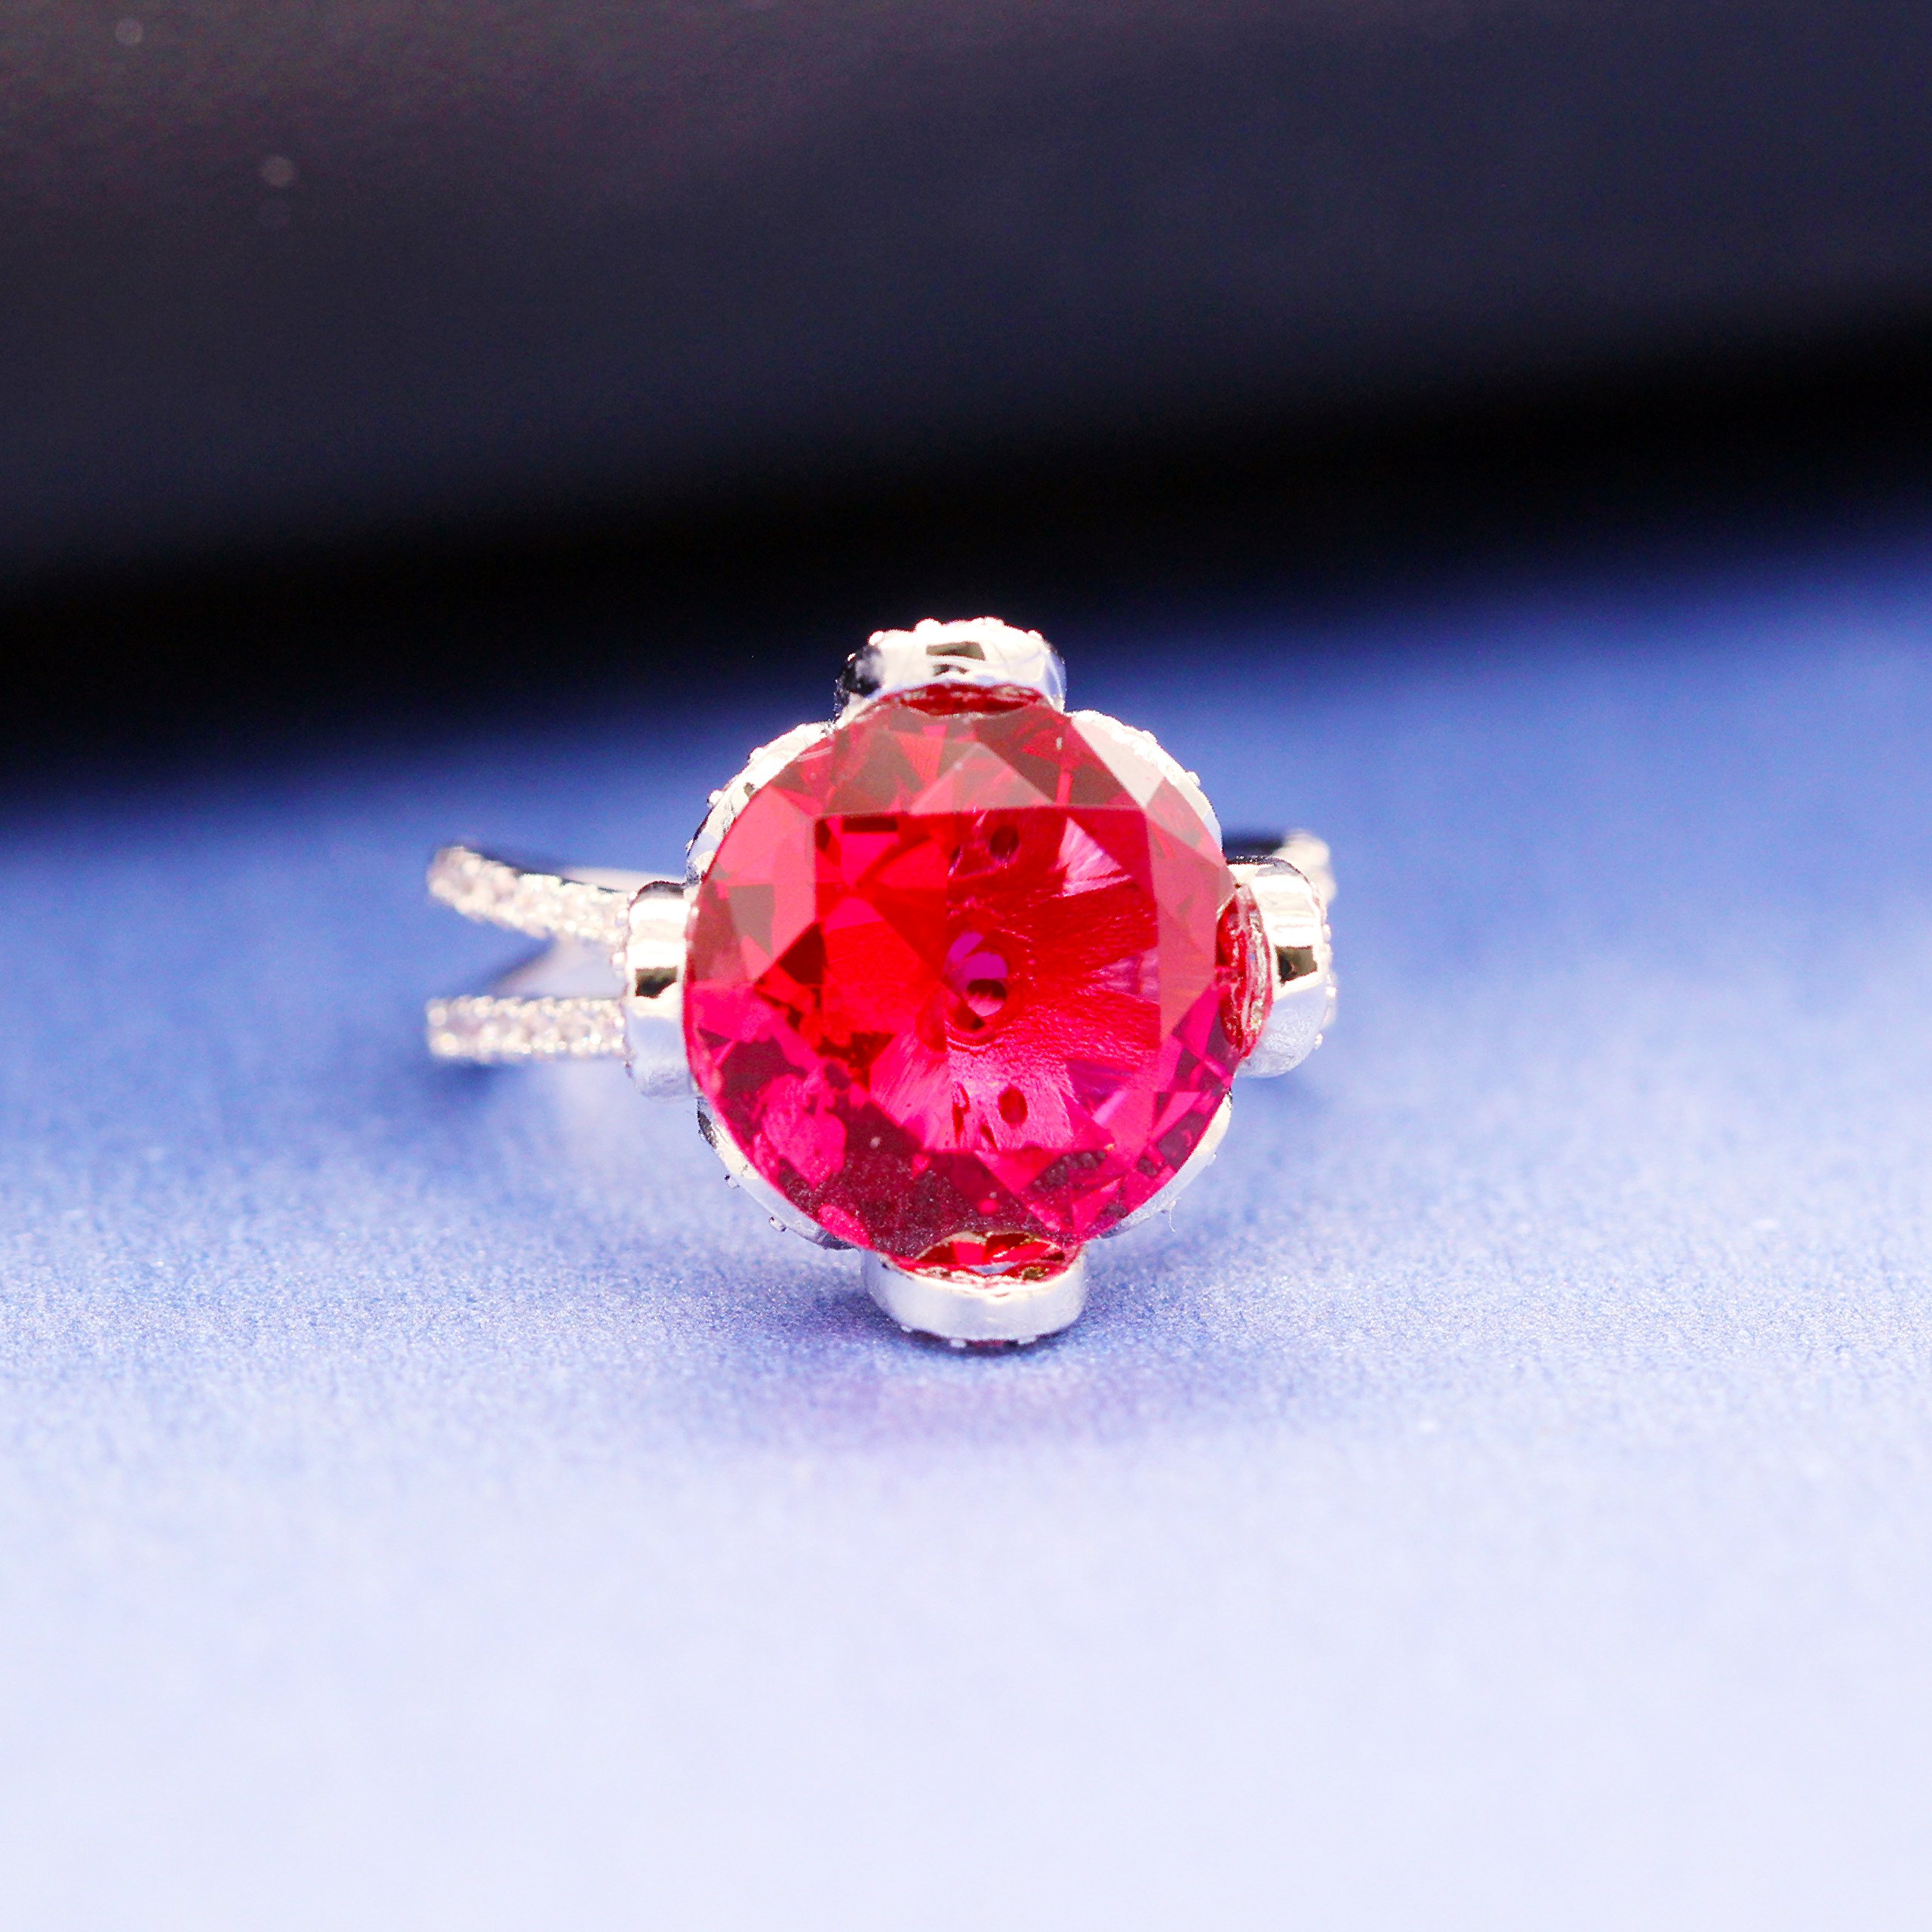 Uloveido Female Unique Beautiful Red Flower Engagement Wedding Ring - Charm Created Garnet Diamond Jewelry for Women (Size 6 7 8 9 10) RJ212